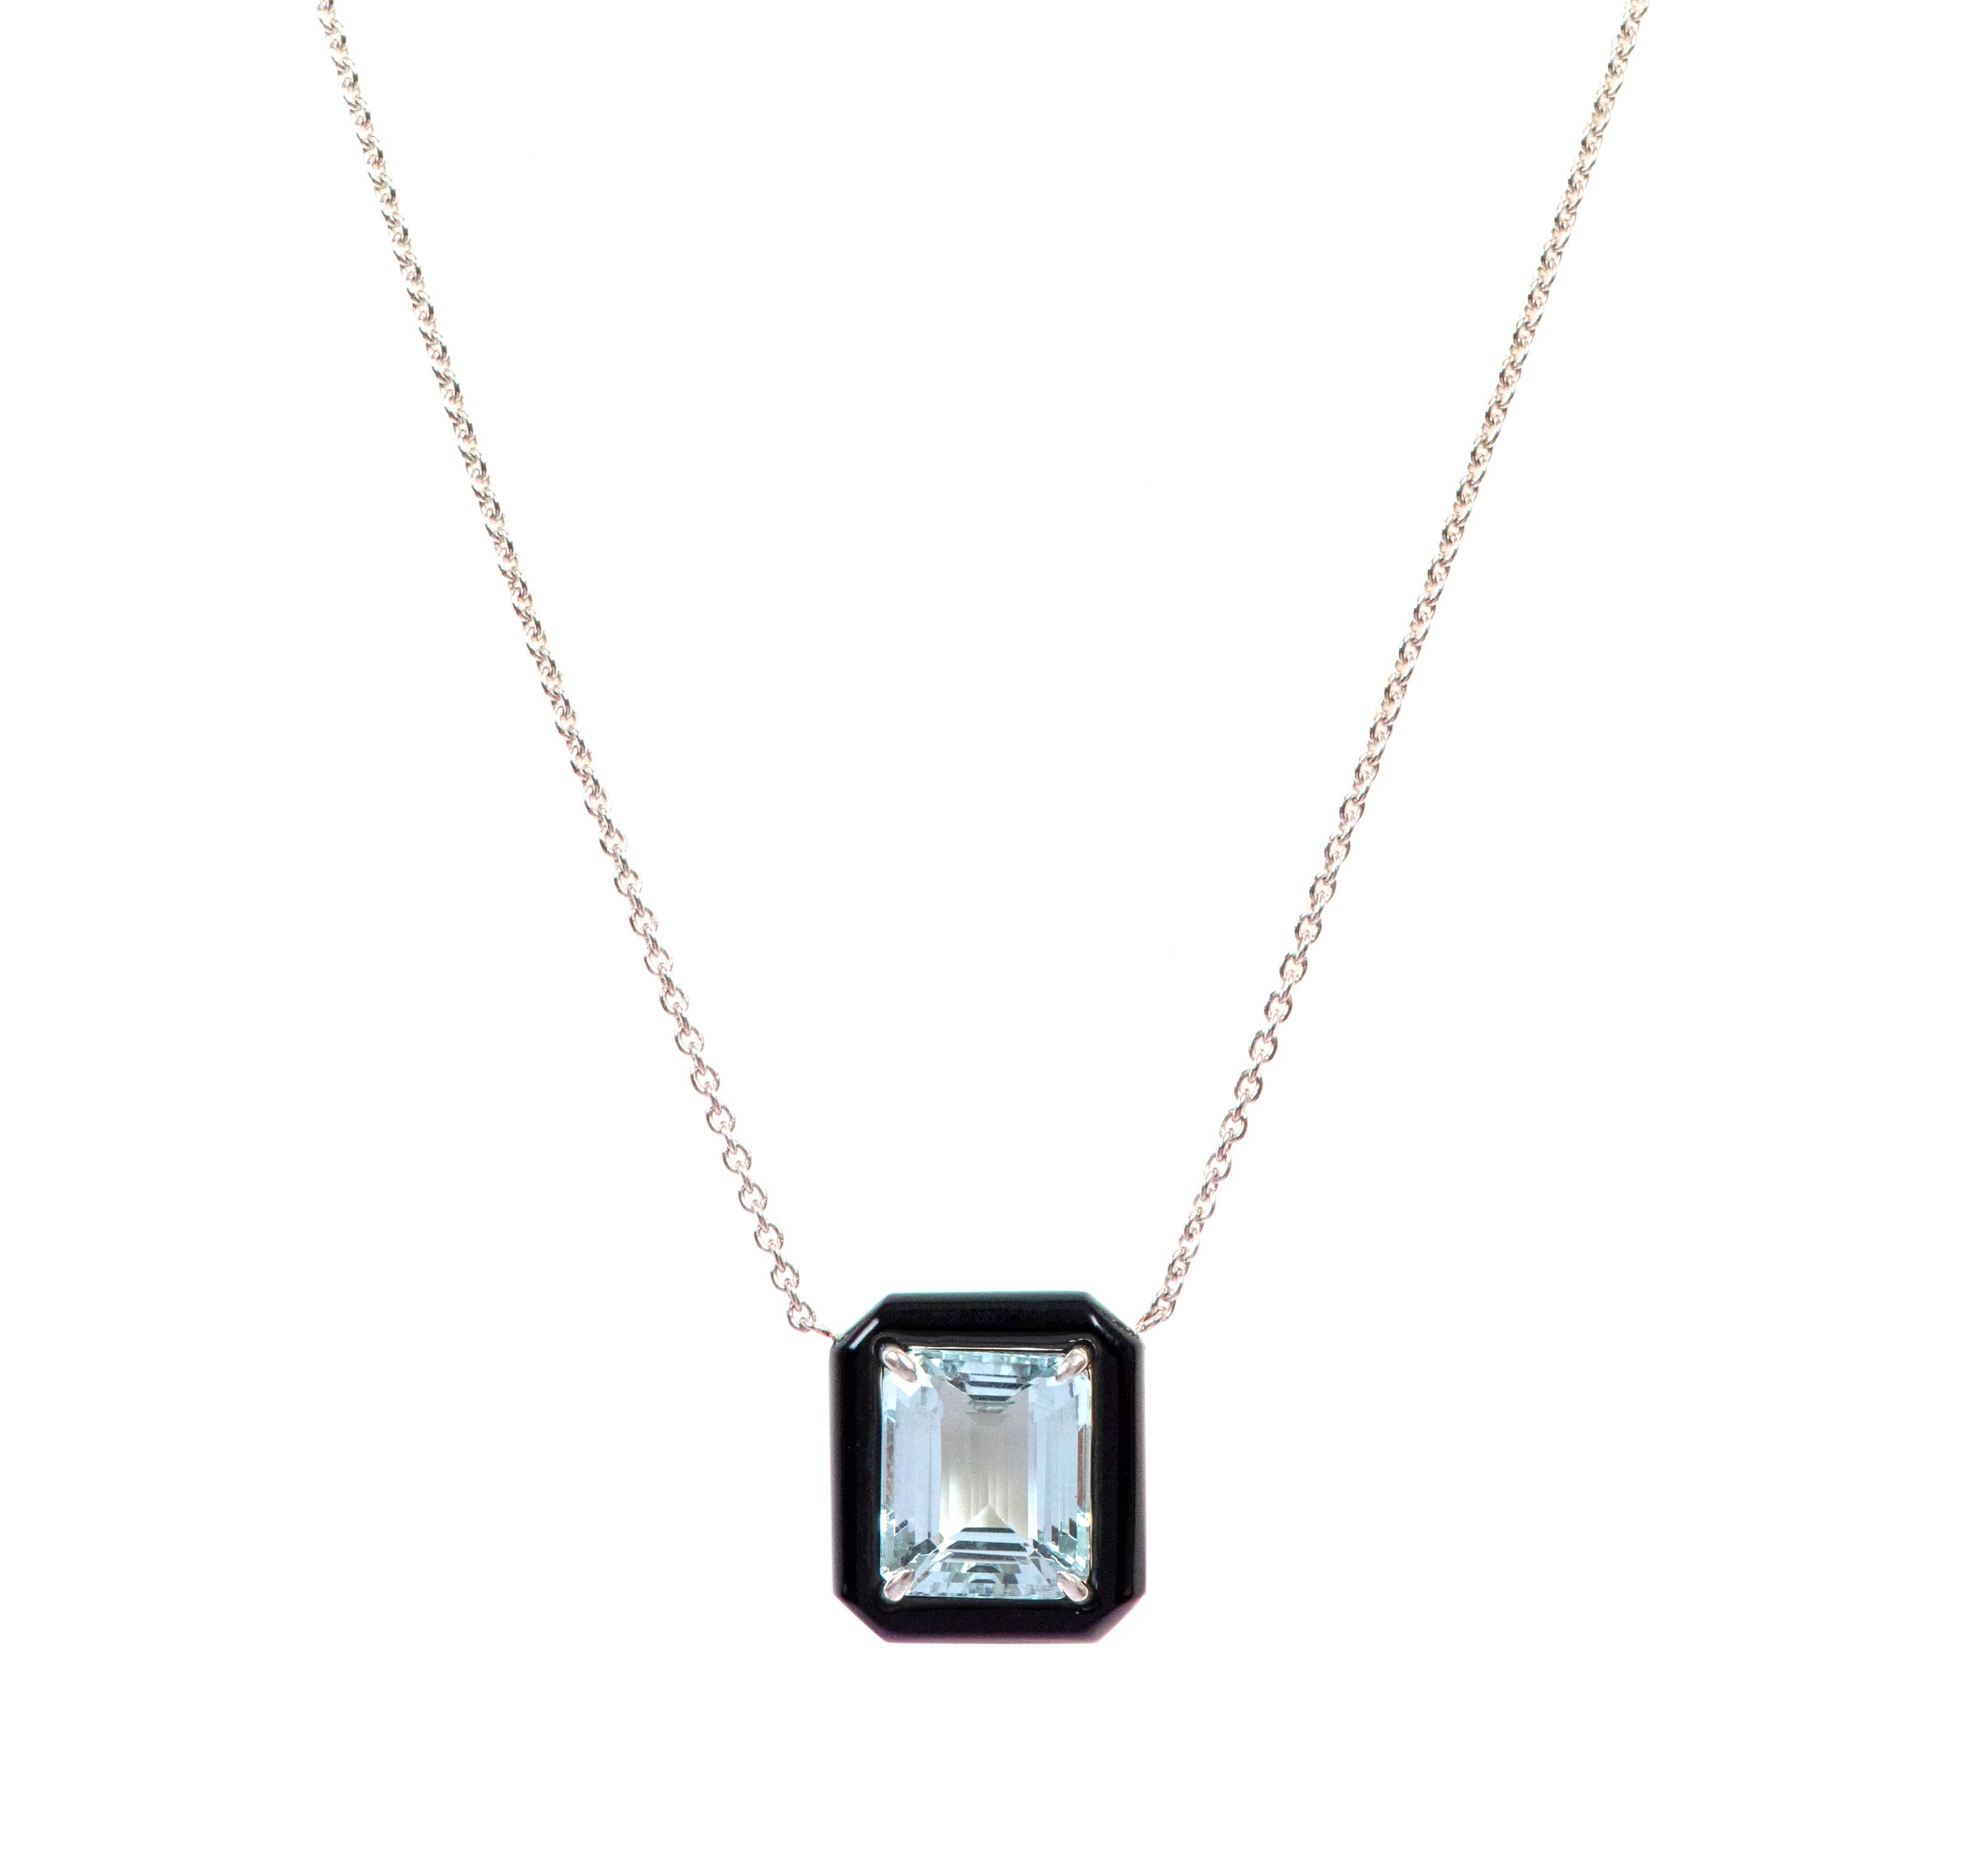 Emerald Cut 18 Karat White Gold 7.80 Carat Aquamarine and Black Onyx Pendant Necklace